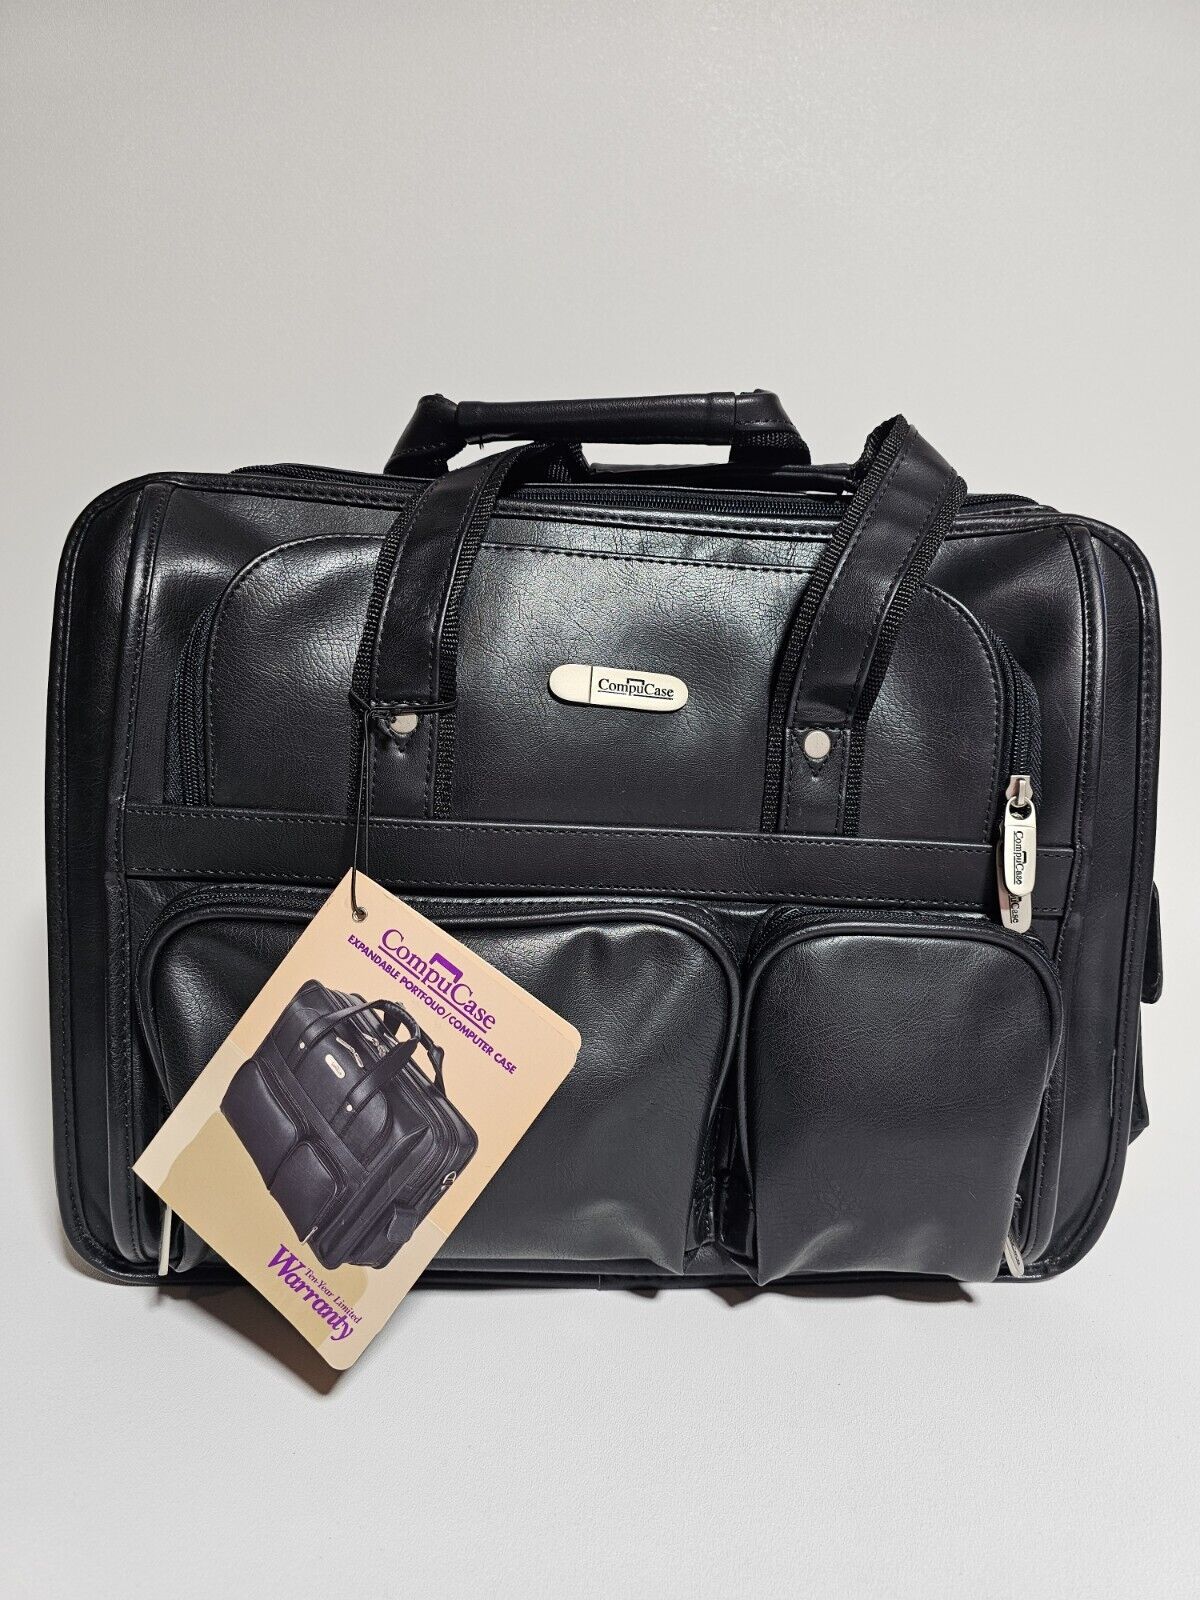 New With Tags Expandable Compu Case Briefcase Laptop Bag Cumputer Portfolio Bag